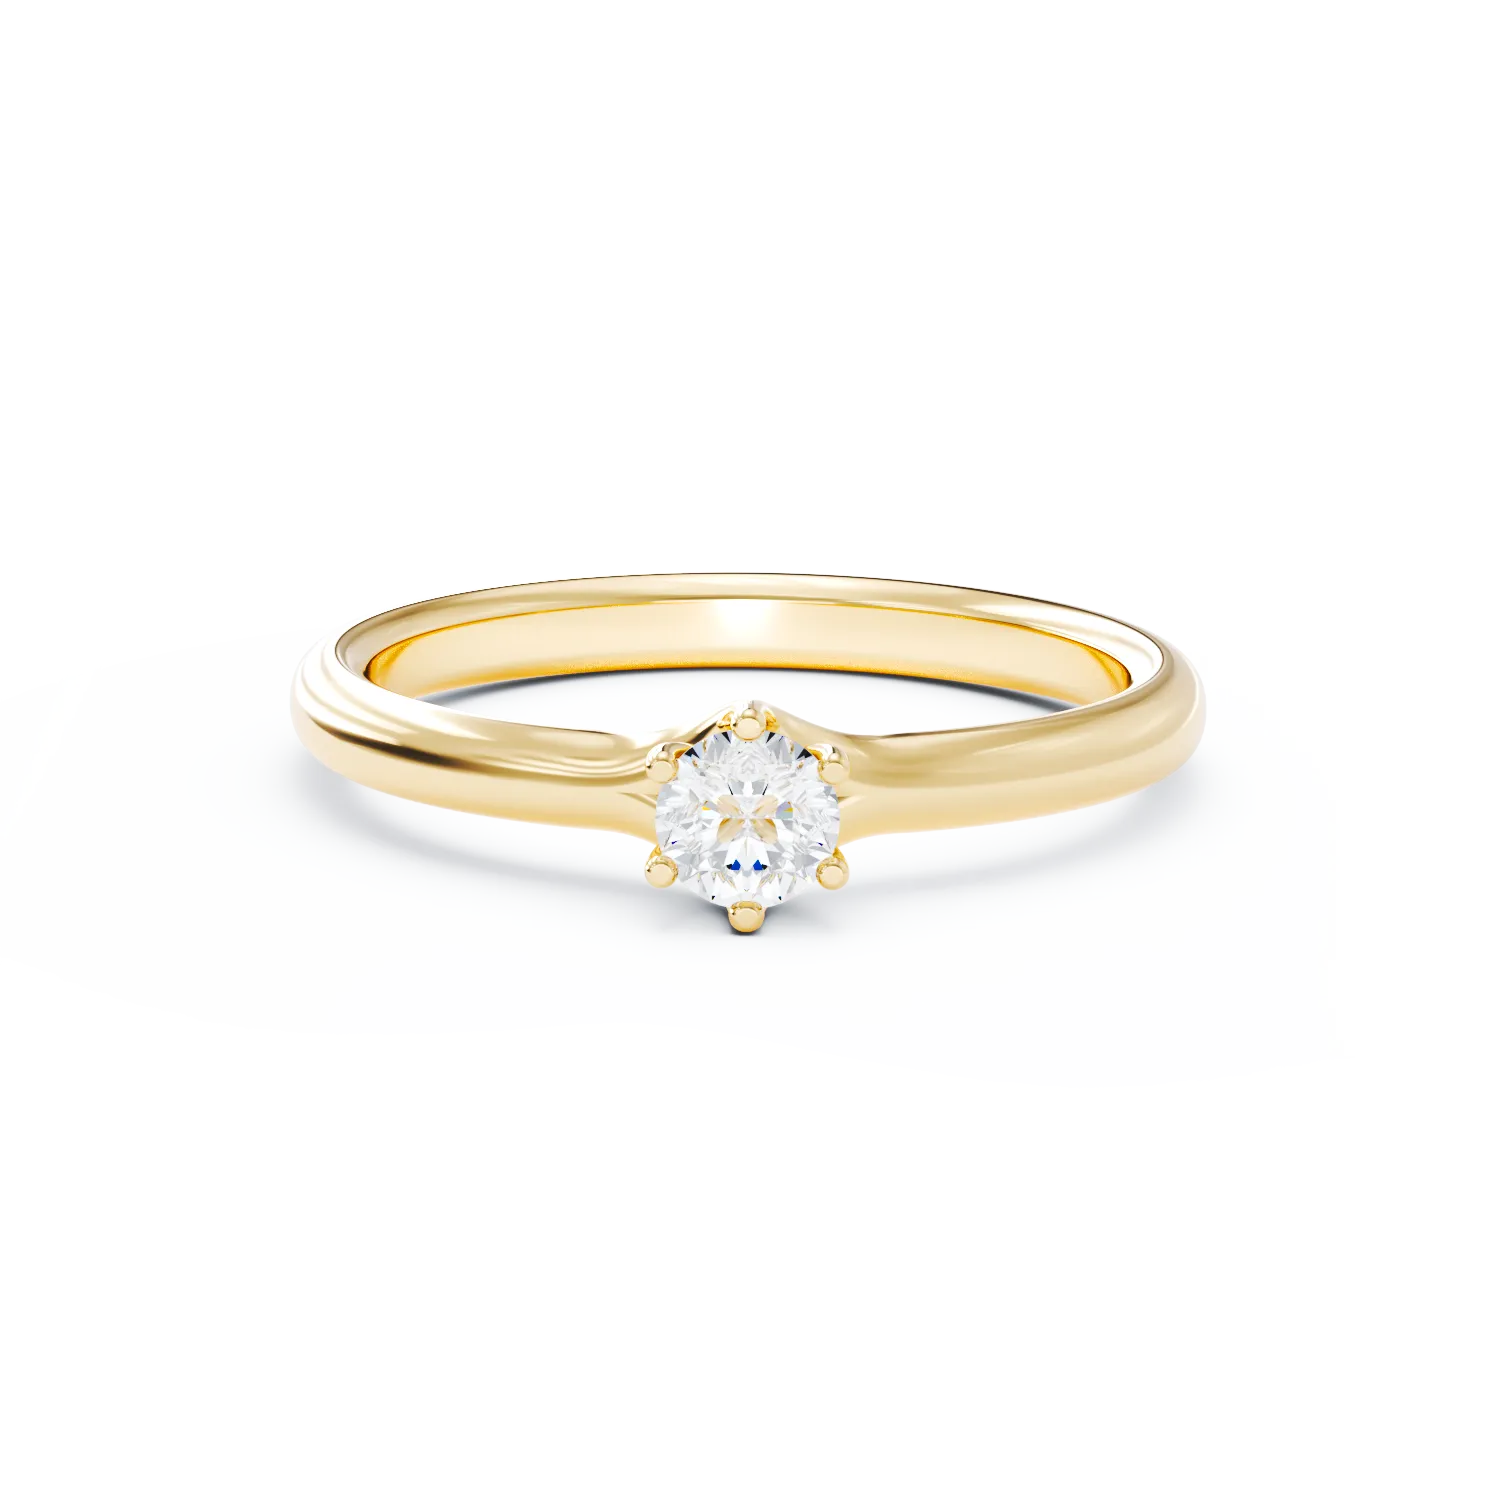 Inel de logodna din aur galben de 18K cu un diamant solitaire de 0.25ct